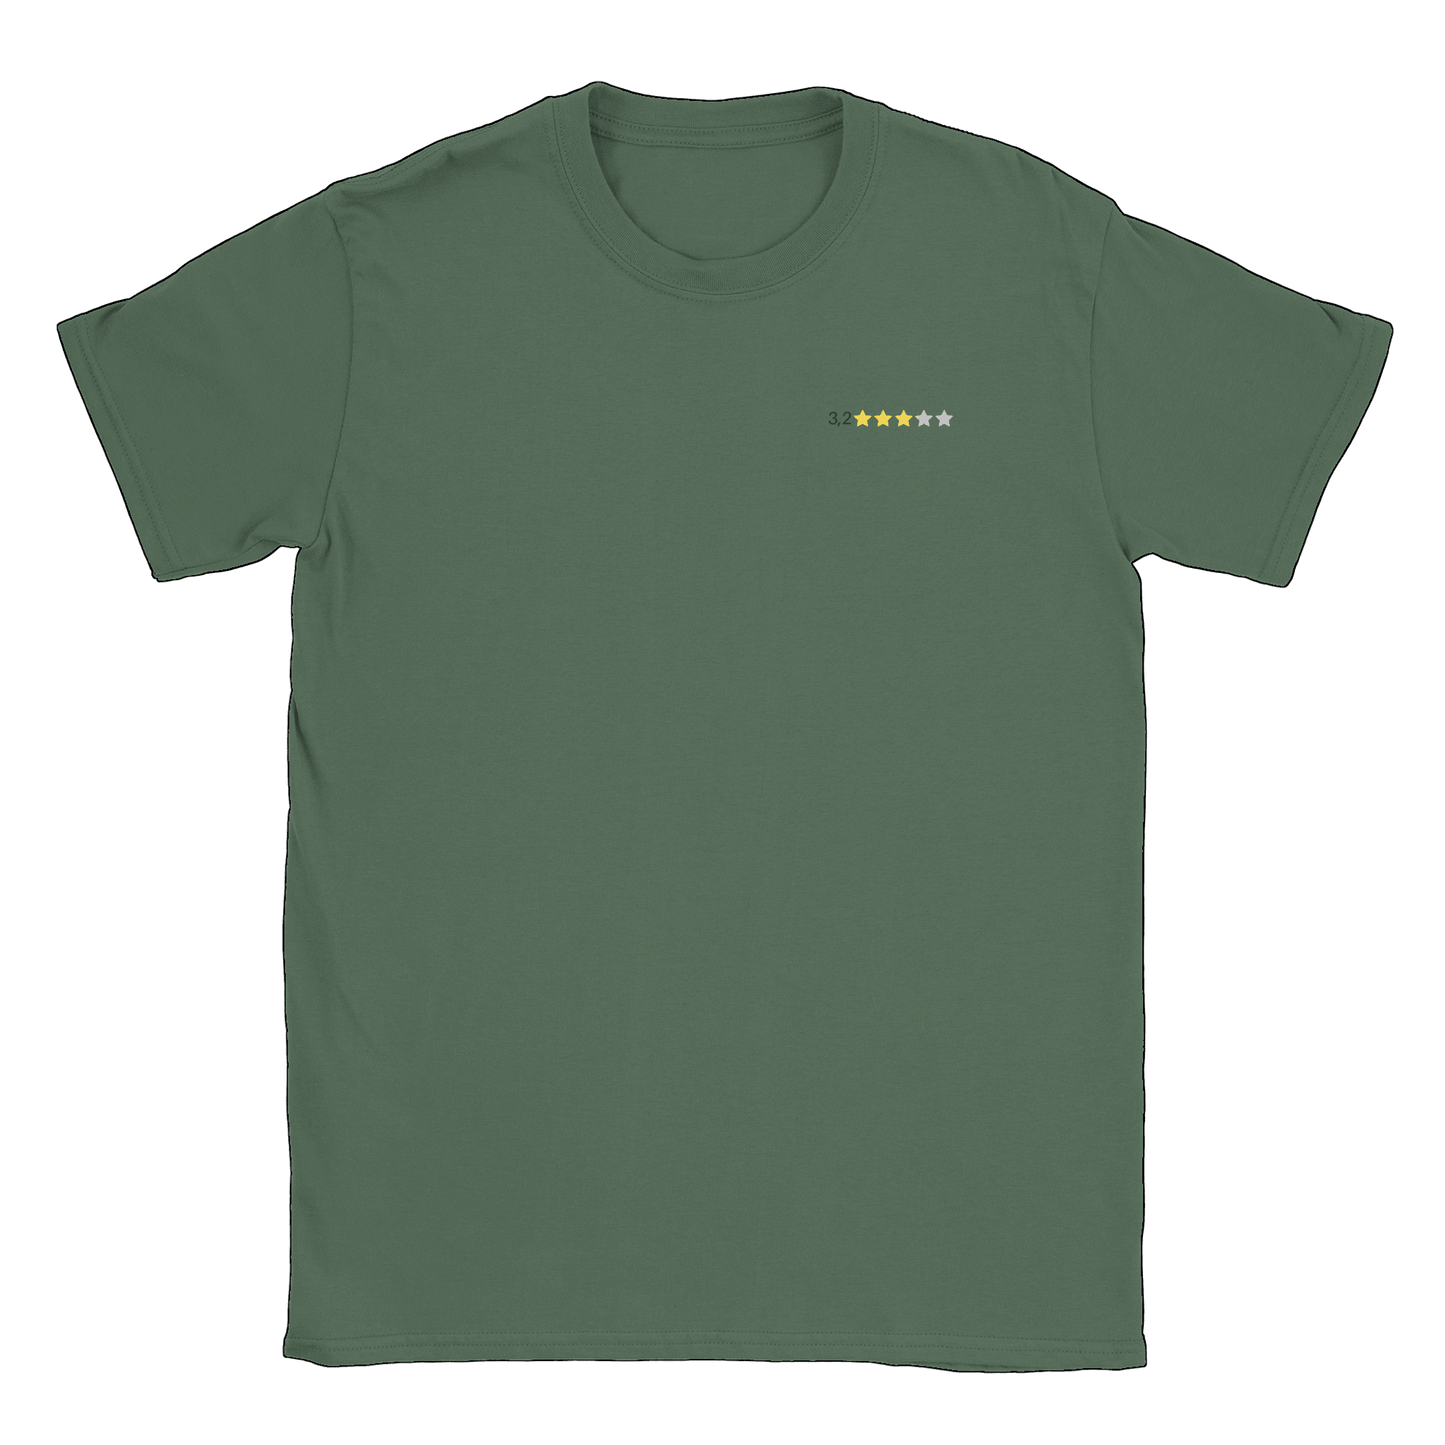 3,2 - T-shirt Military Green